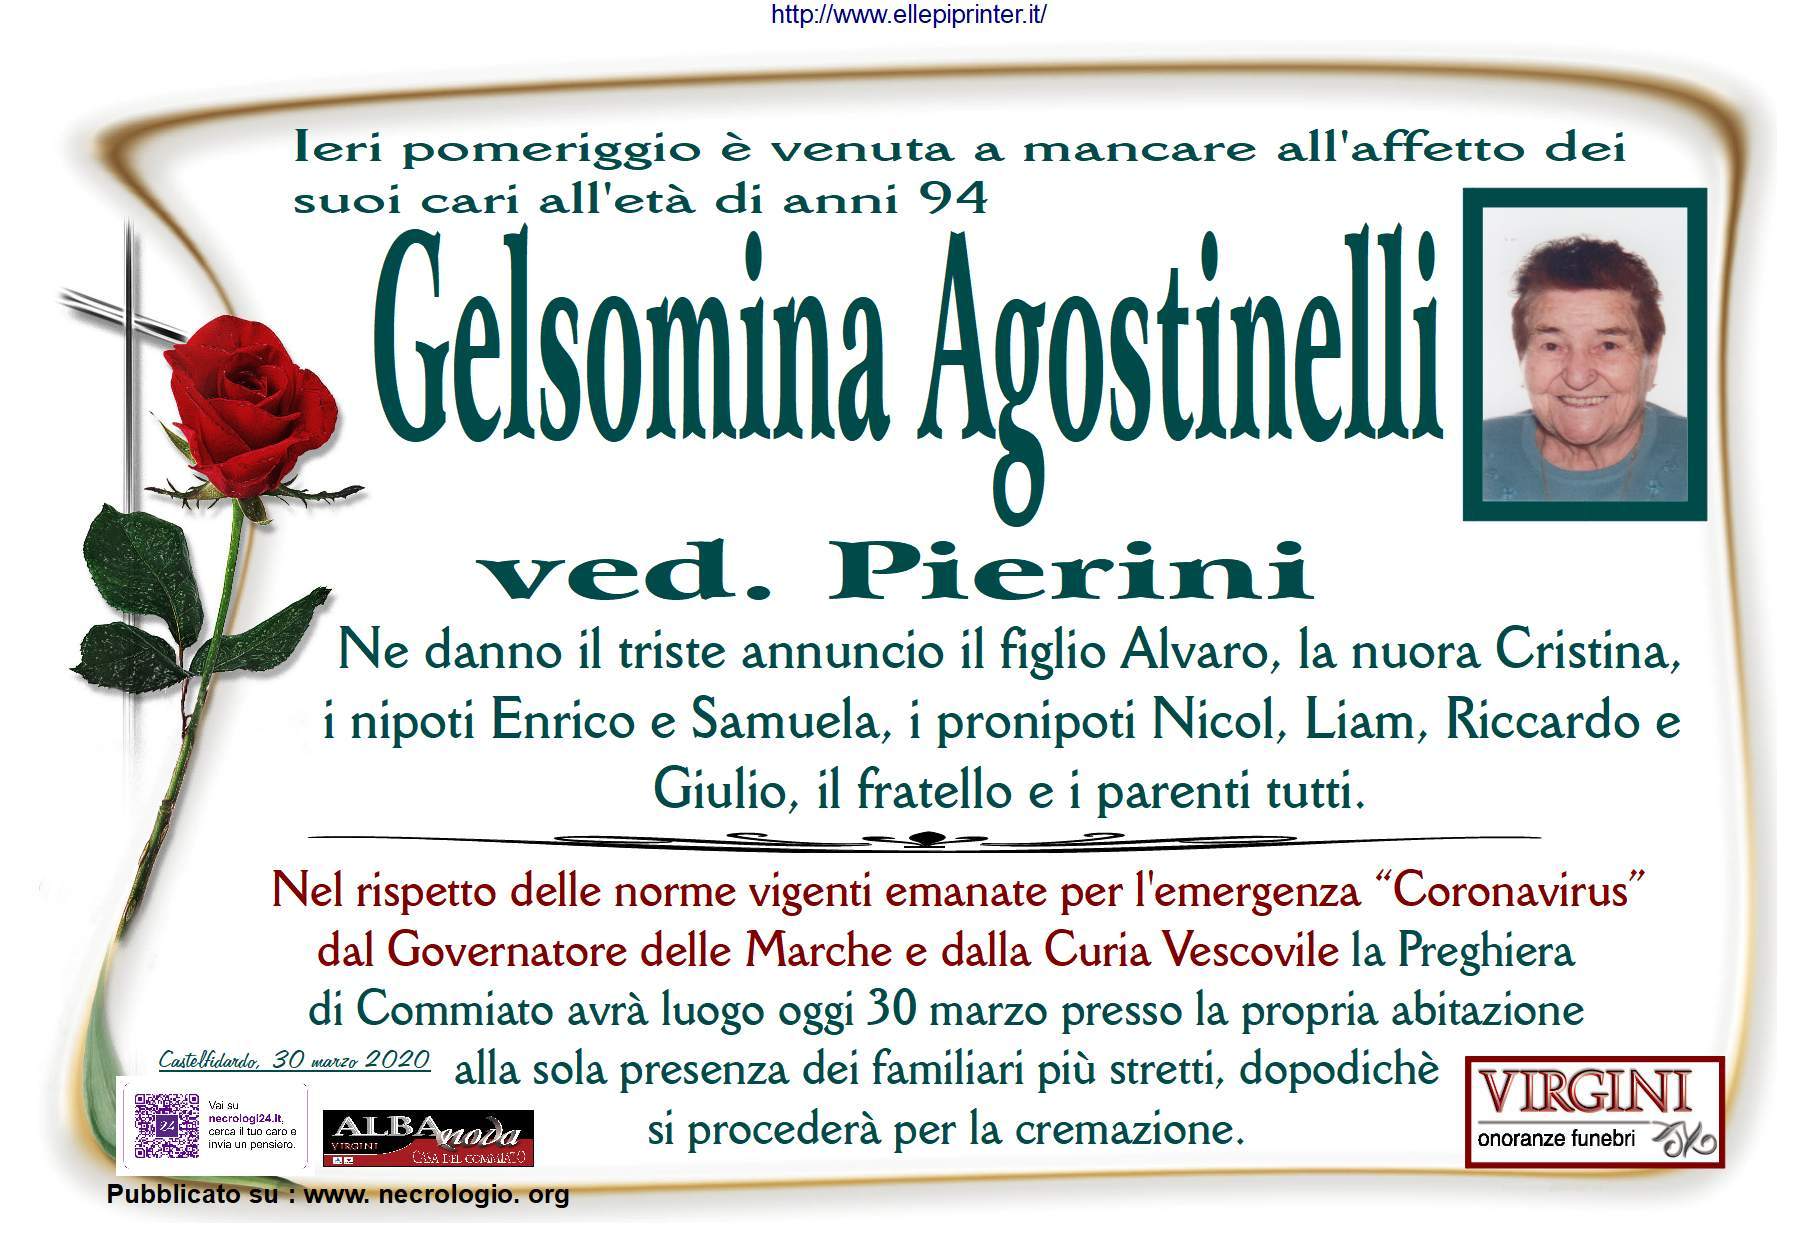 Gelsomina Agostinelli